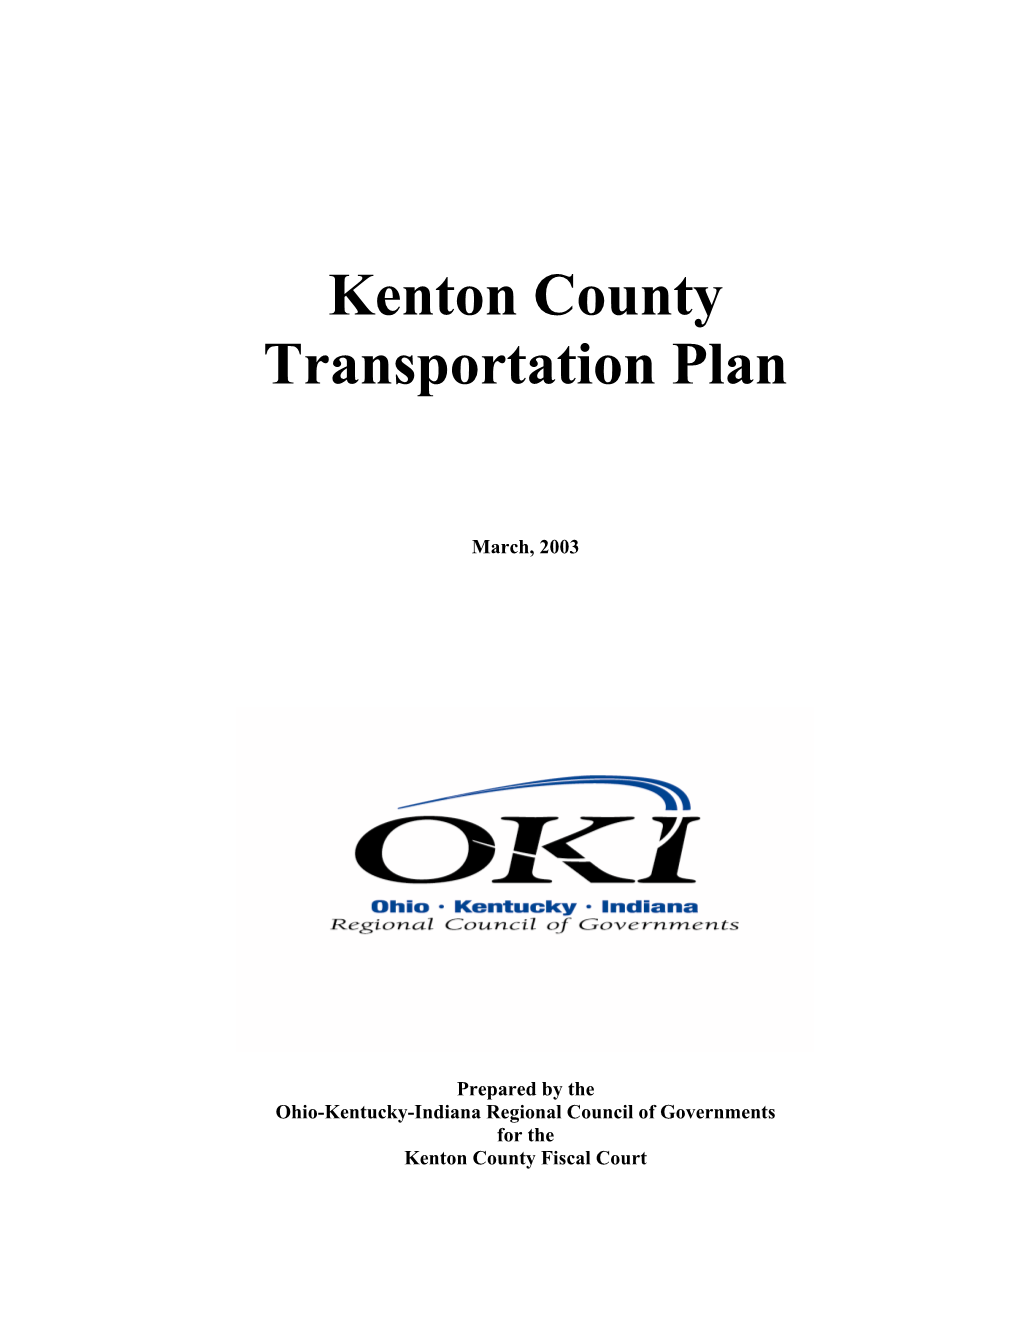 Kenton County Transportation Plan